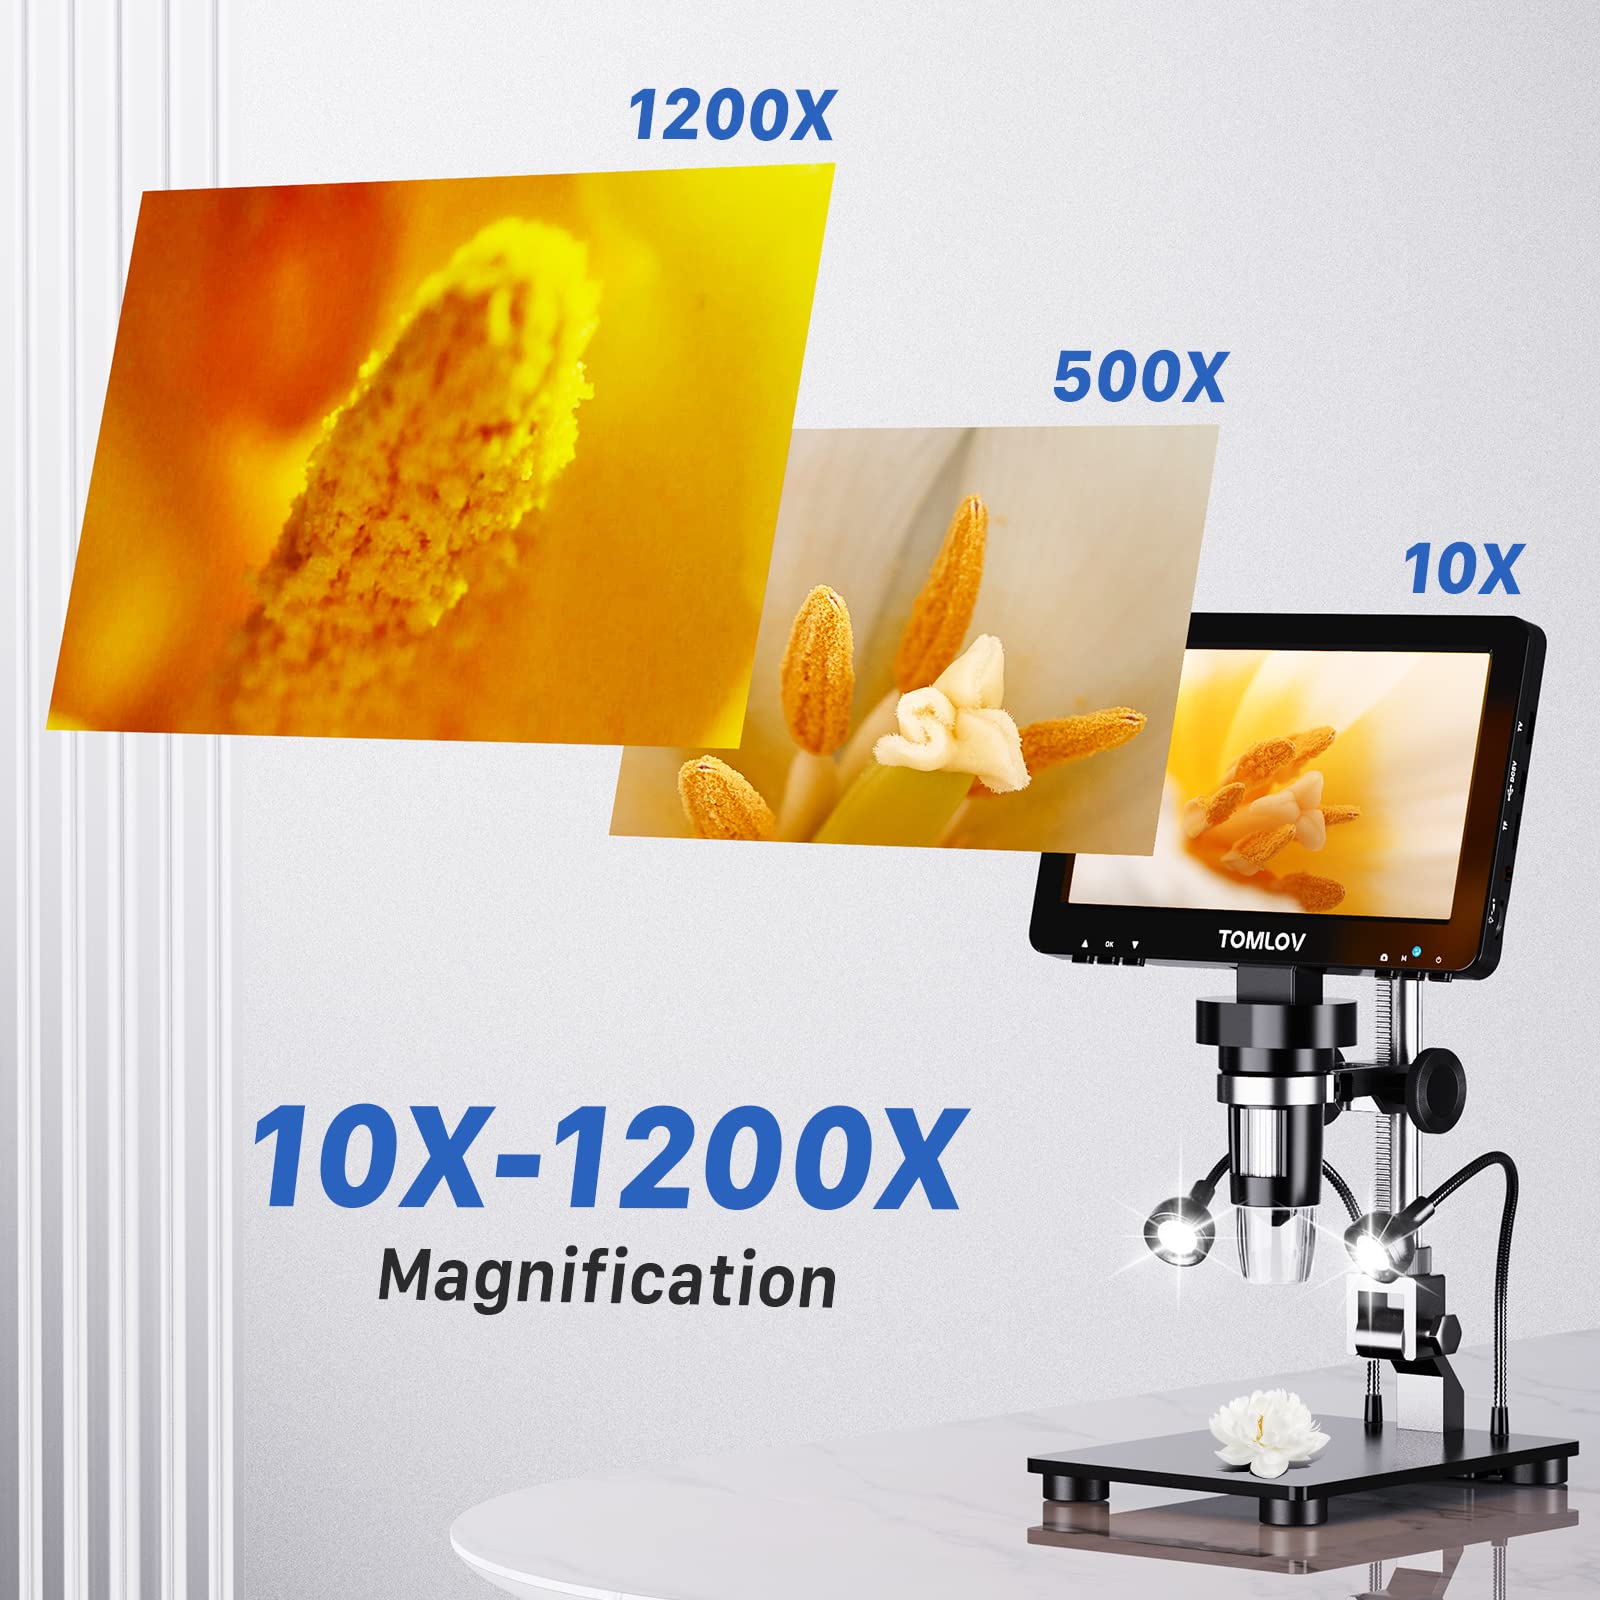 TOMLOV DM9 Pro HDMI Digital Mikroskop mit 7 Zoll IPS Bildschirm 